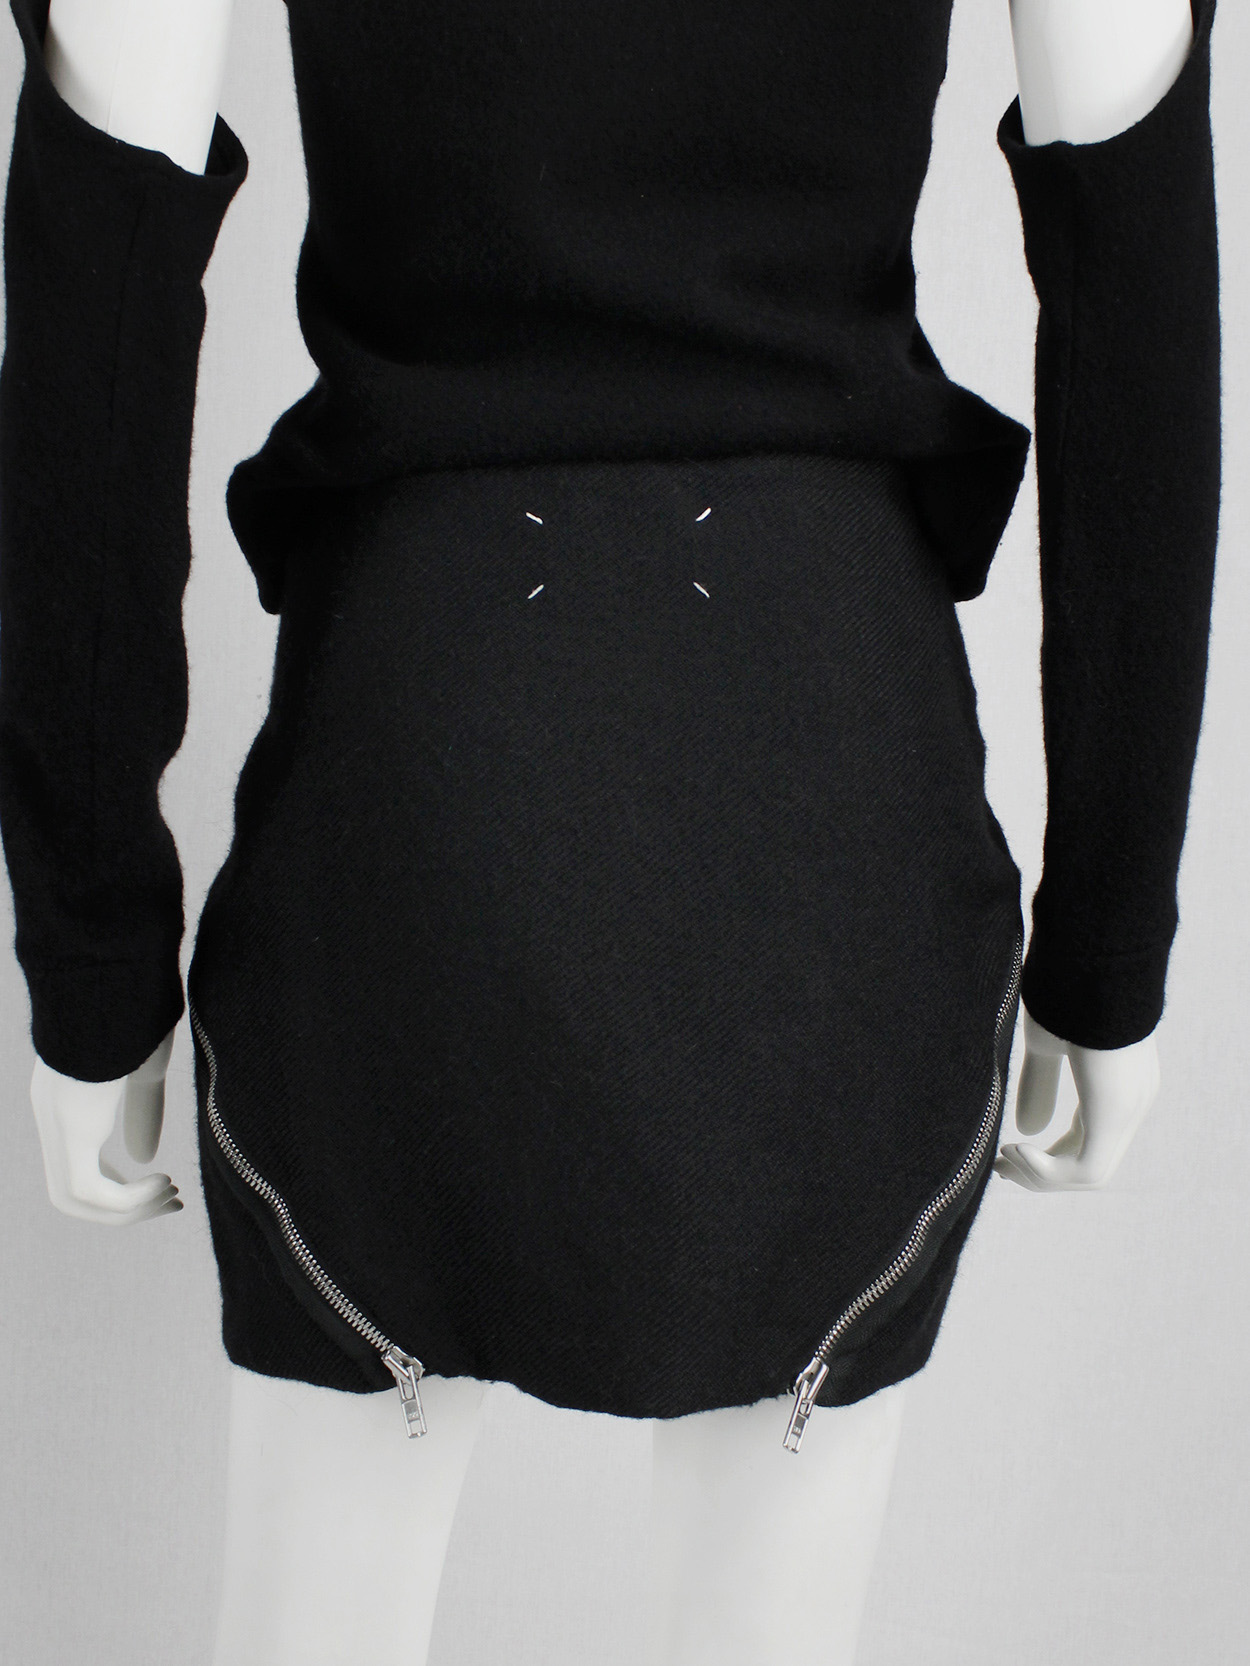 Maison Martin Margiela black skirt with diagonal zippers — fall 